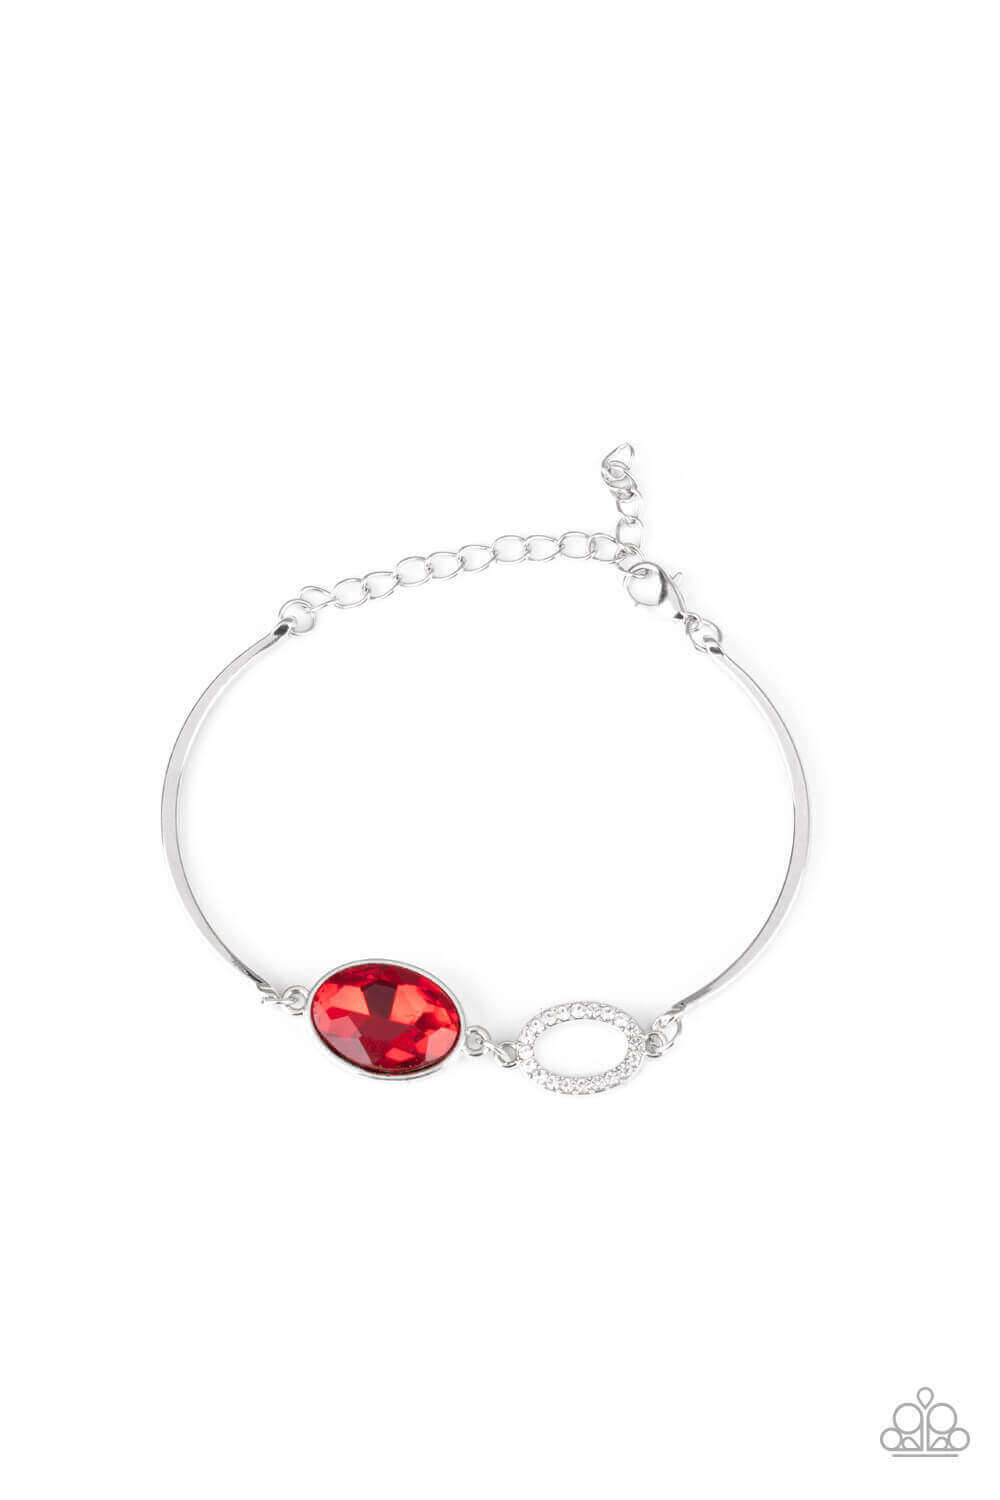 Unstoppable Glamour - Red Necklace & Bracelet Combo - Princess Glam Shop